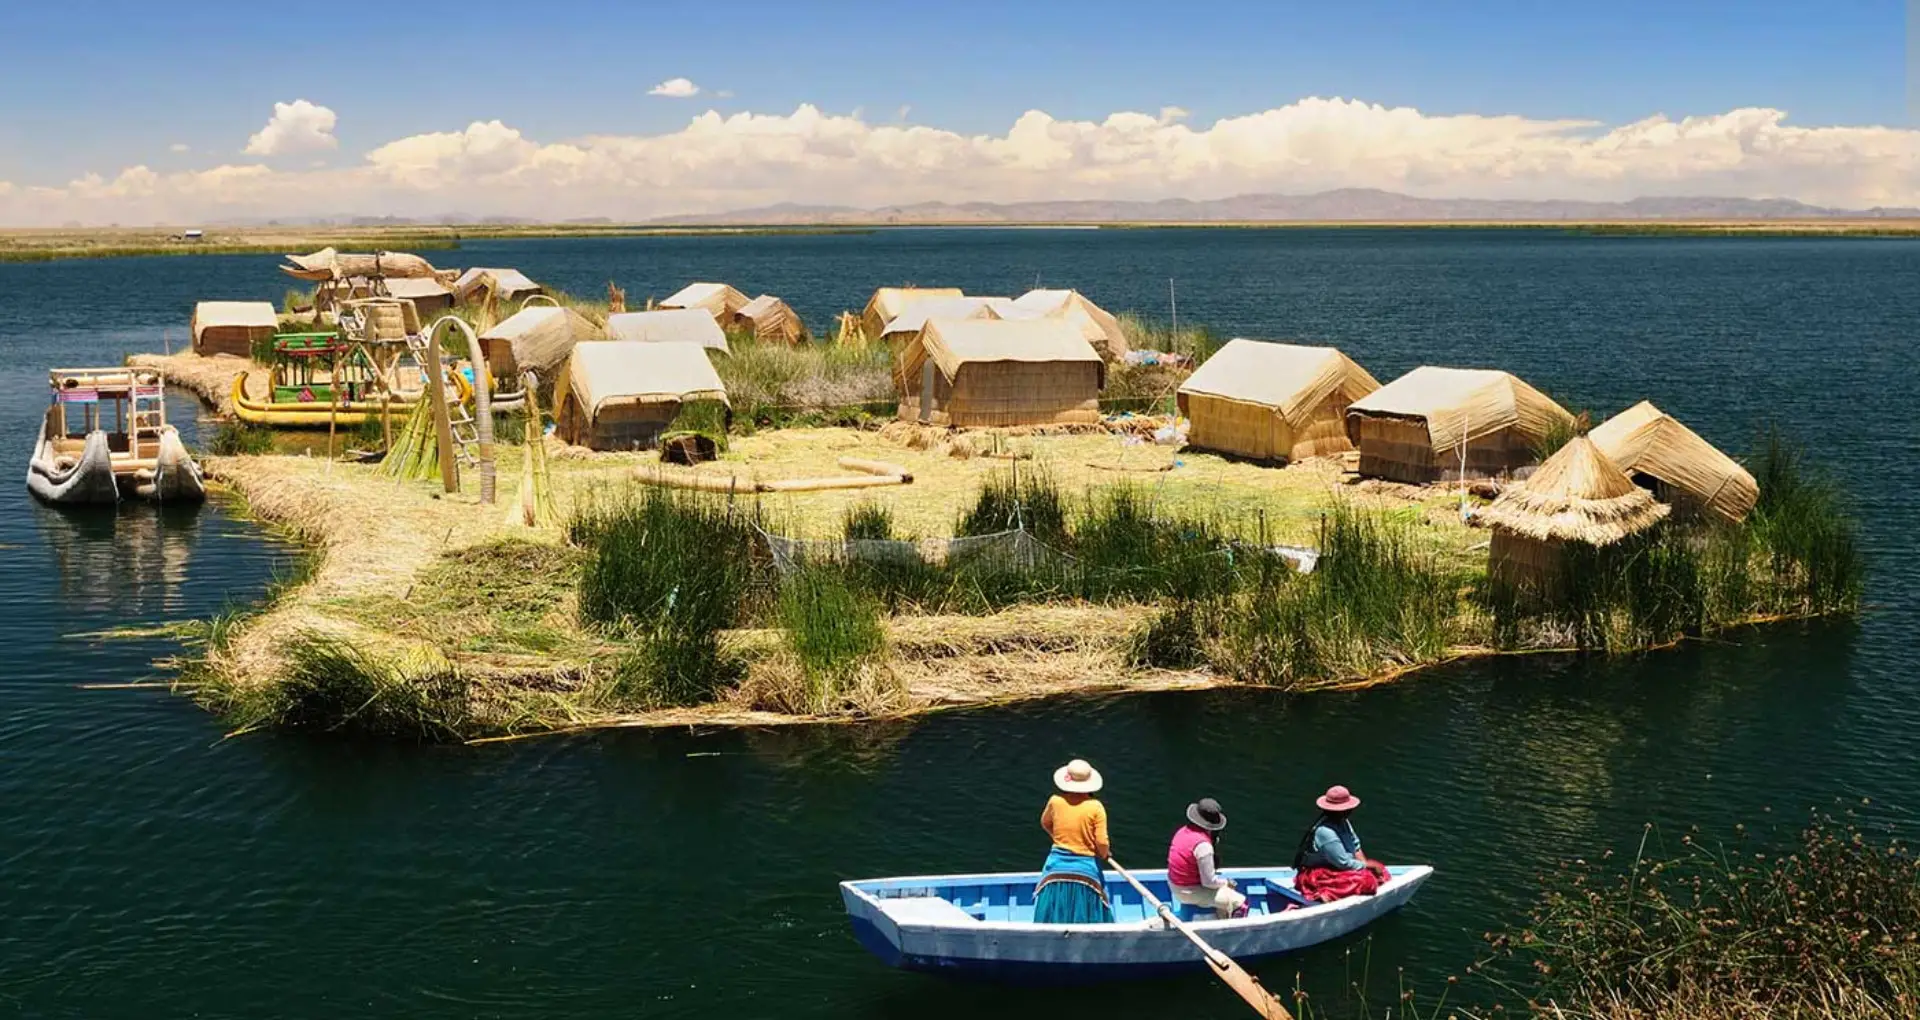 Puno Lake Titicaca